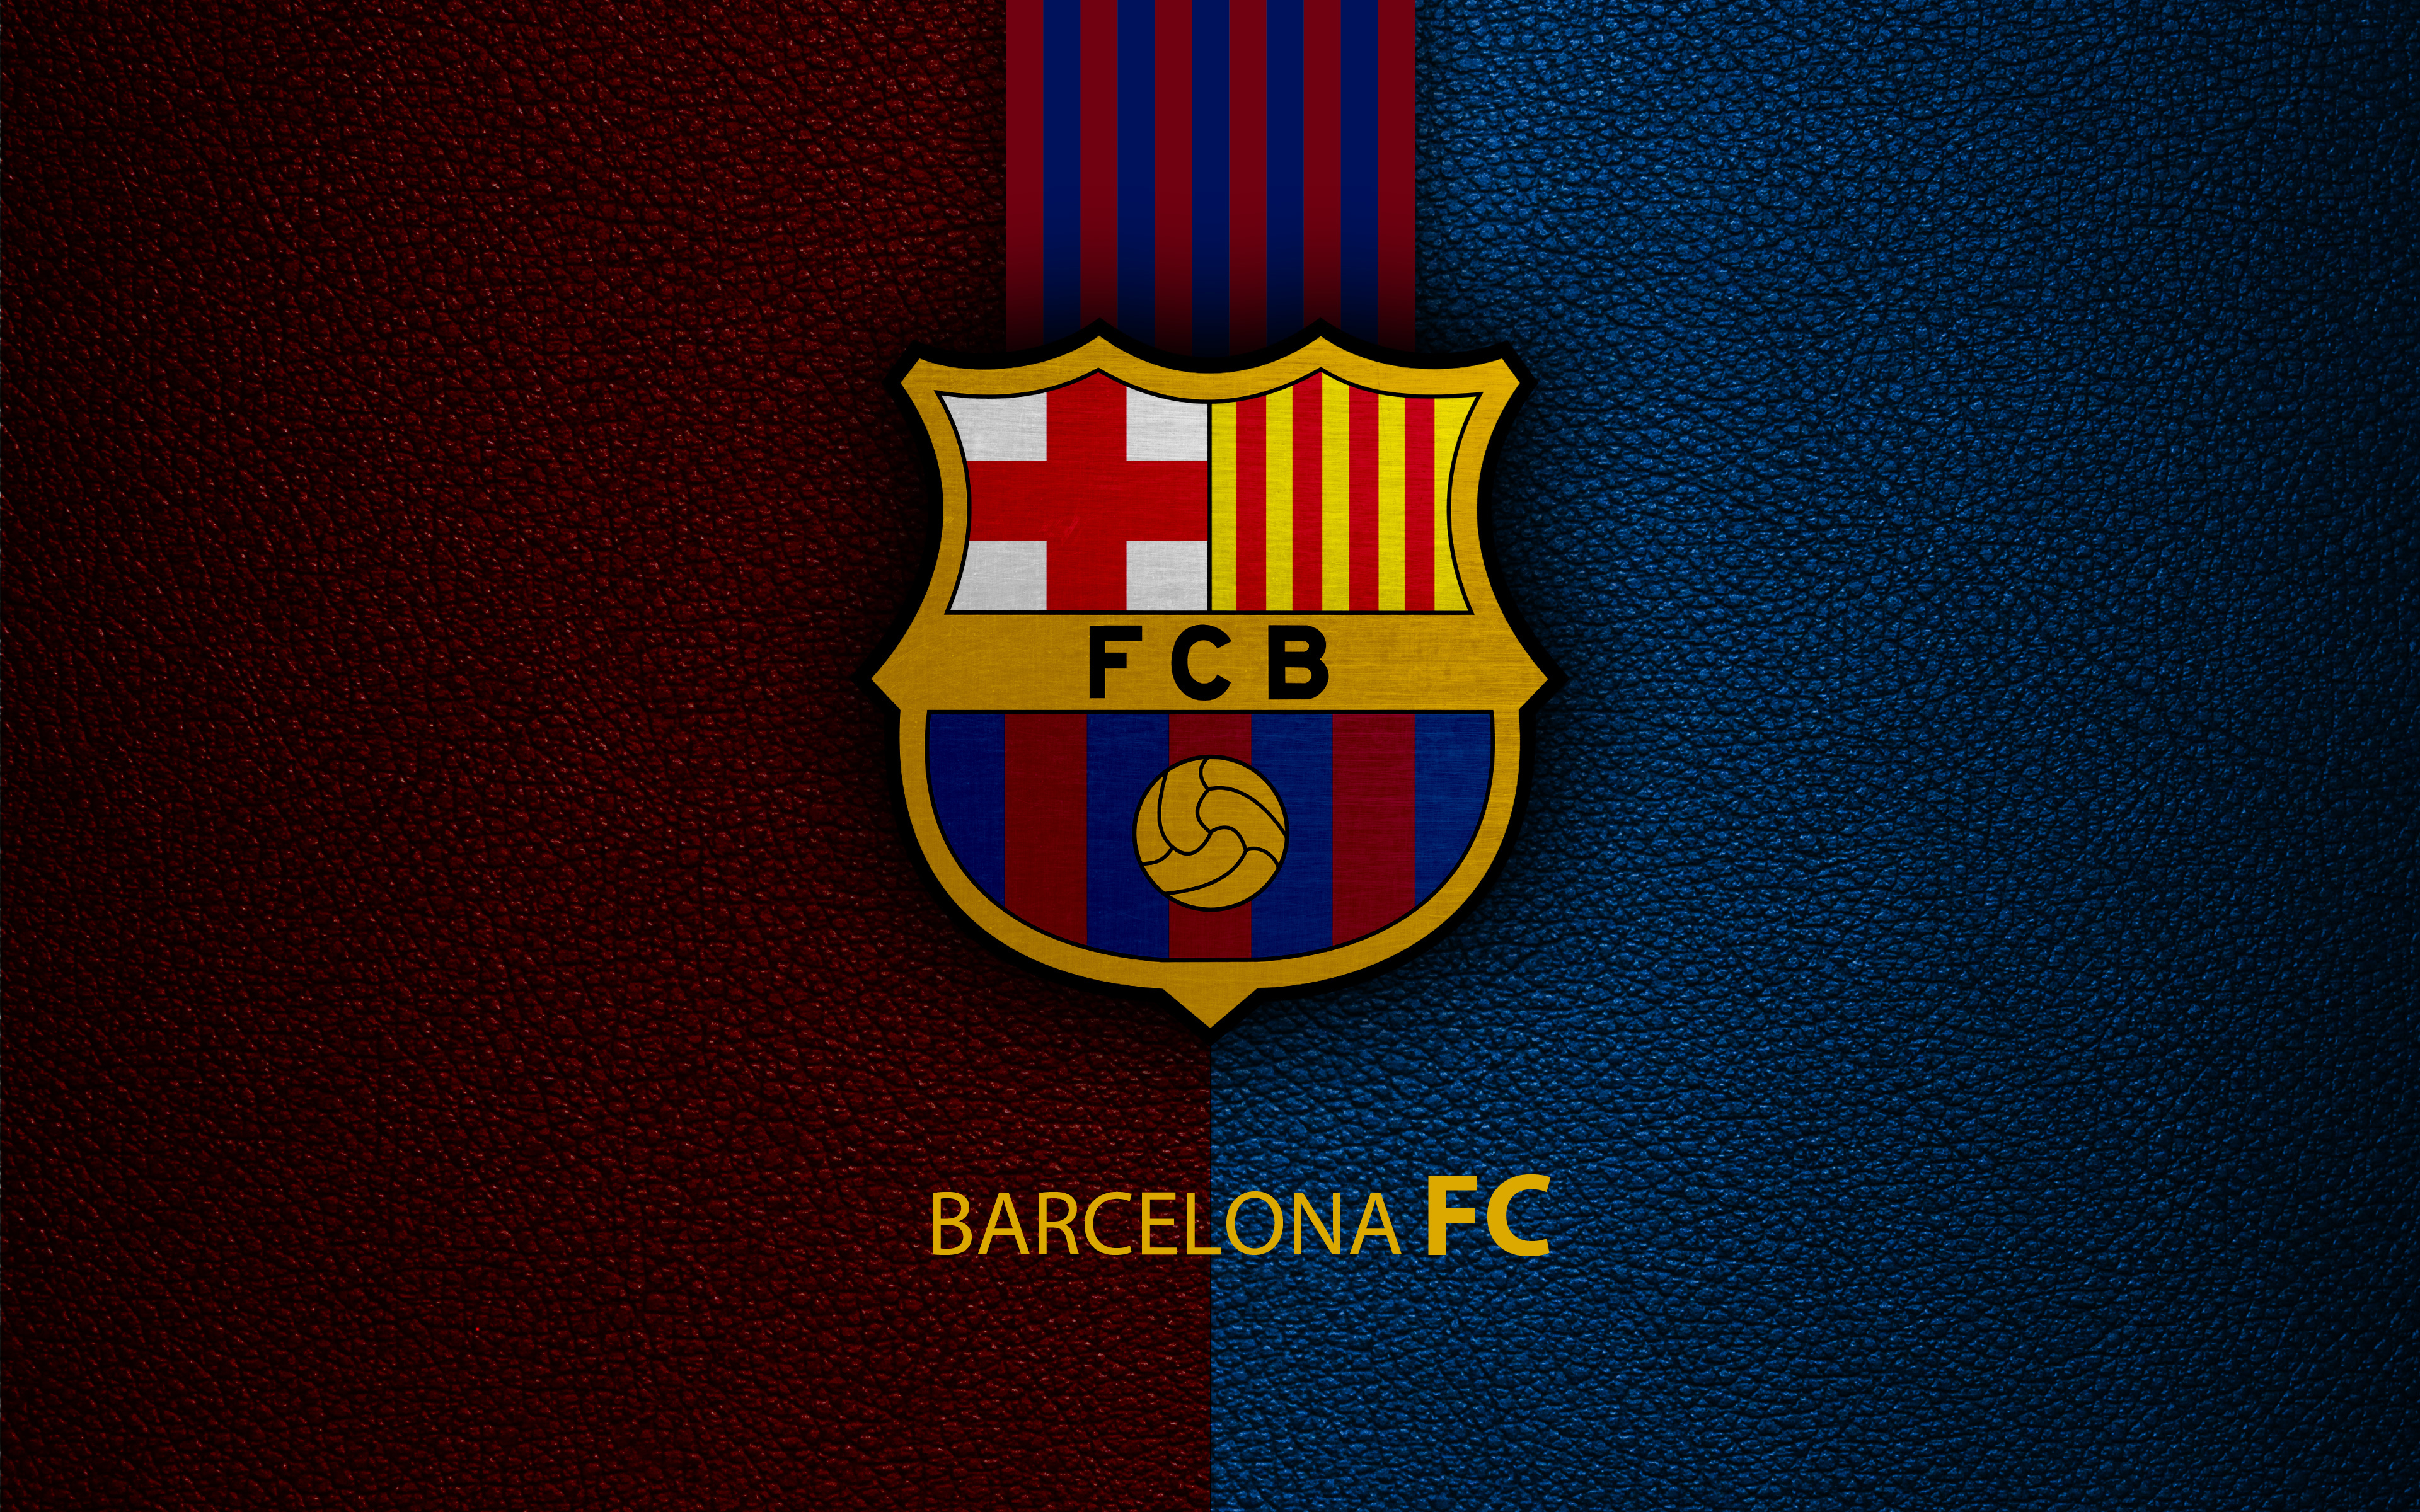 fc barcelona, sports, logo, soccer